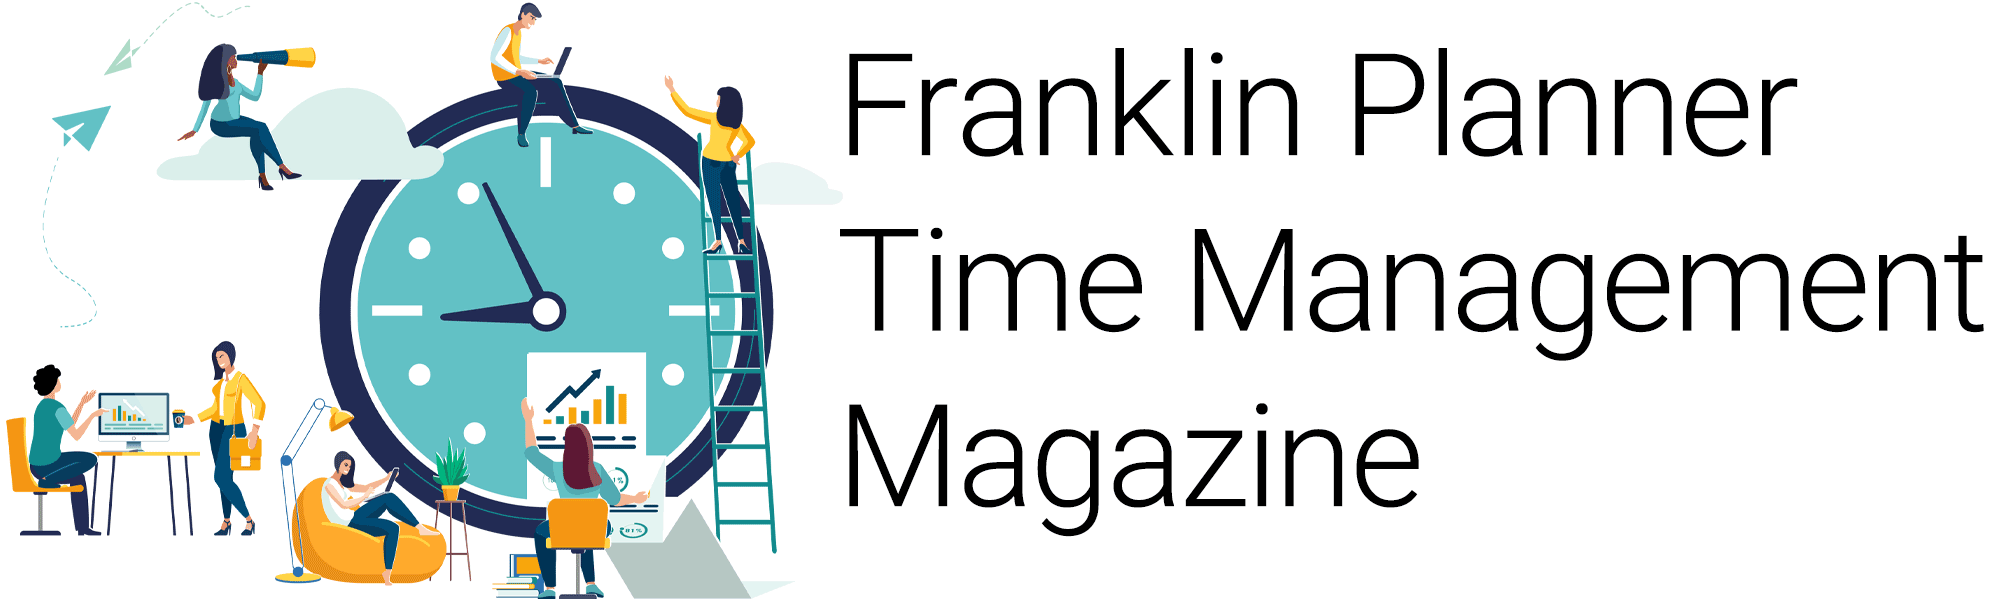 Franklin Planner Time Management Magazine